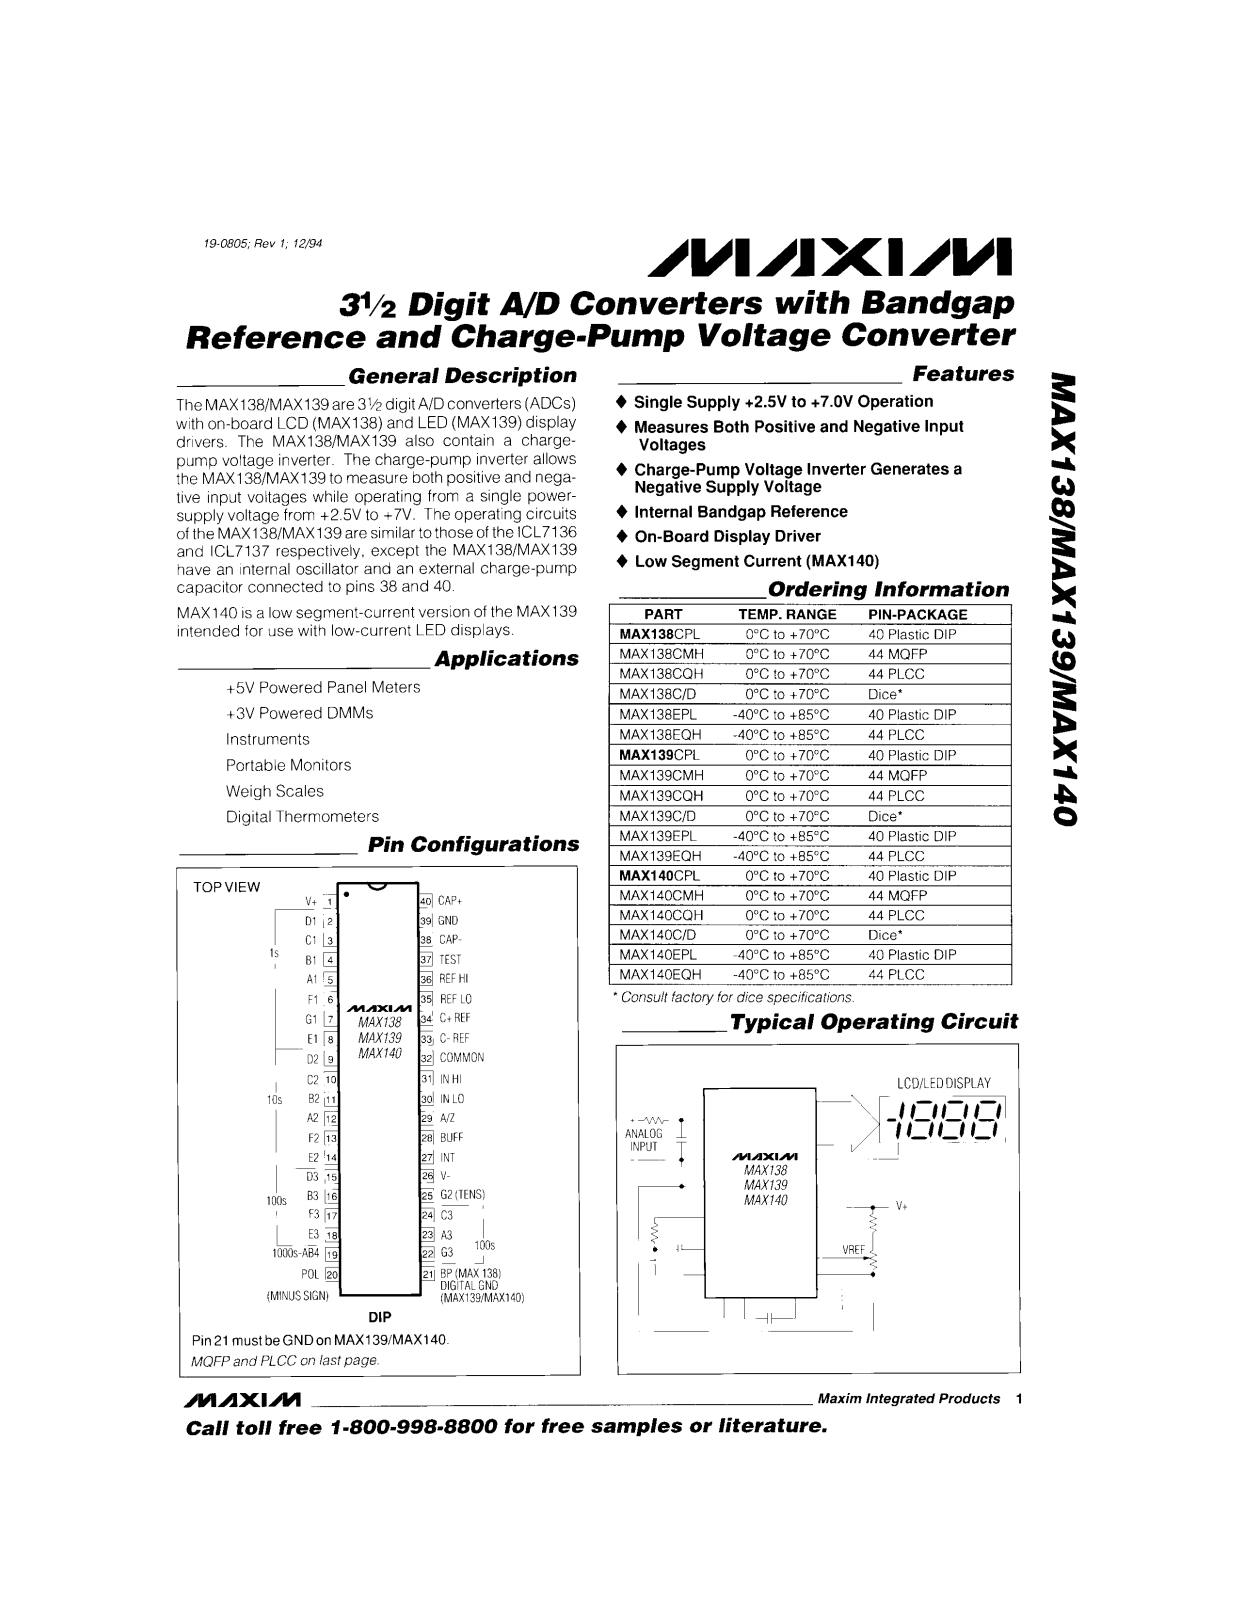 Maxim MAX140EQH, MAX140EPL, MAX140CQH, MAX140CPL, MAX140CMH Datasheet